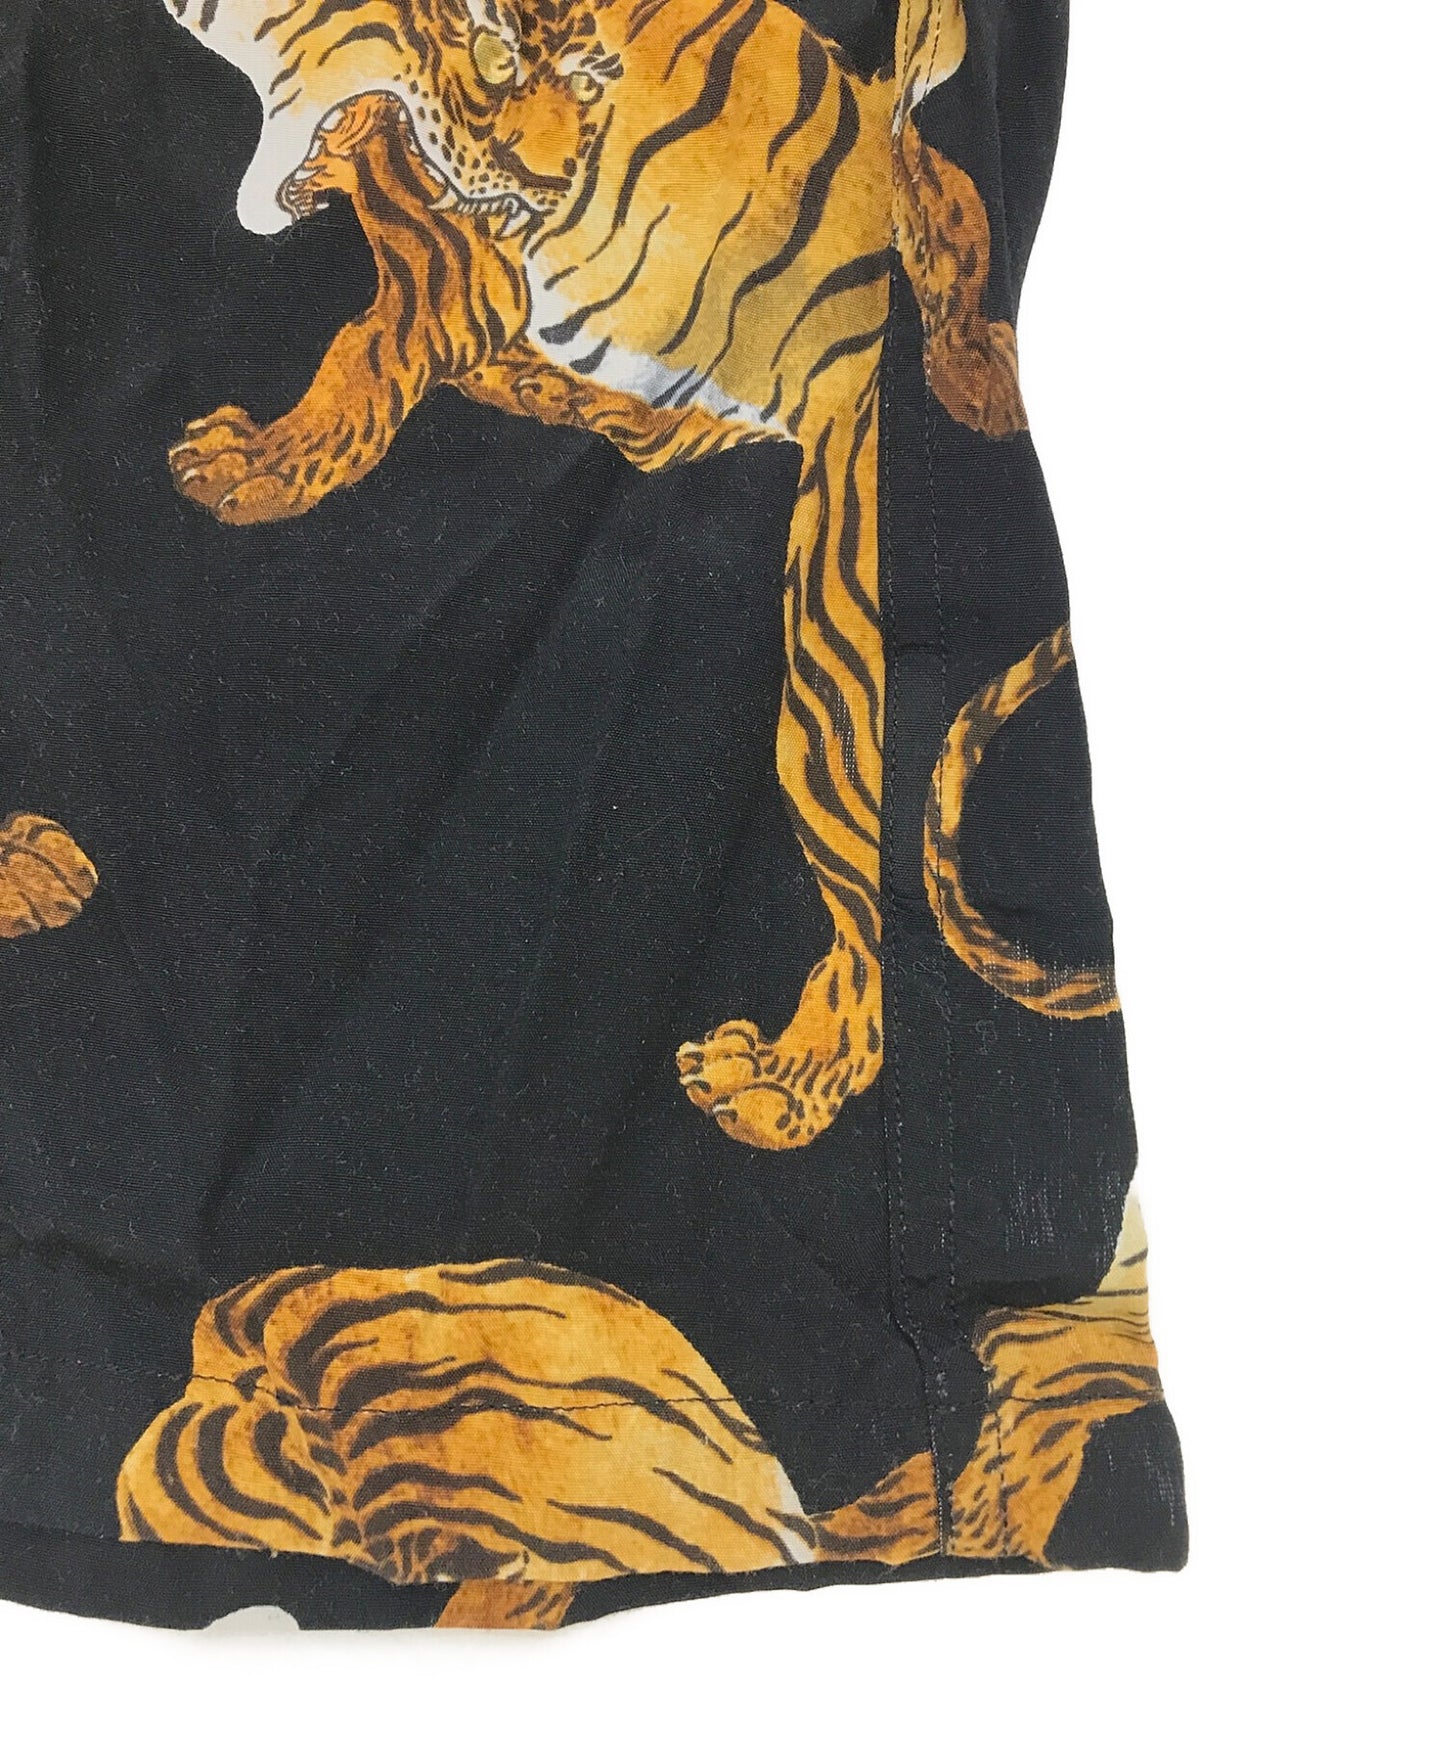 [Pre-owned] WACKO MARIA Tiger Pattern HAWAIIAN SHIRT S/S / Tiger / Standard / Open Collar / Aloha Shirt / Total Pattern 20fwe-wms-hi01